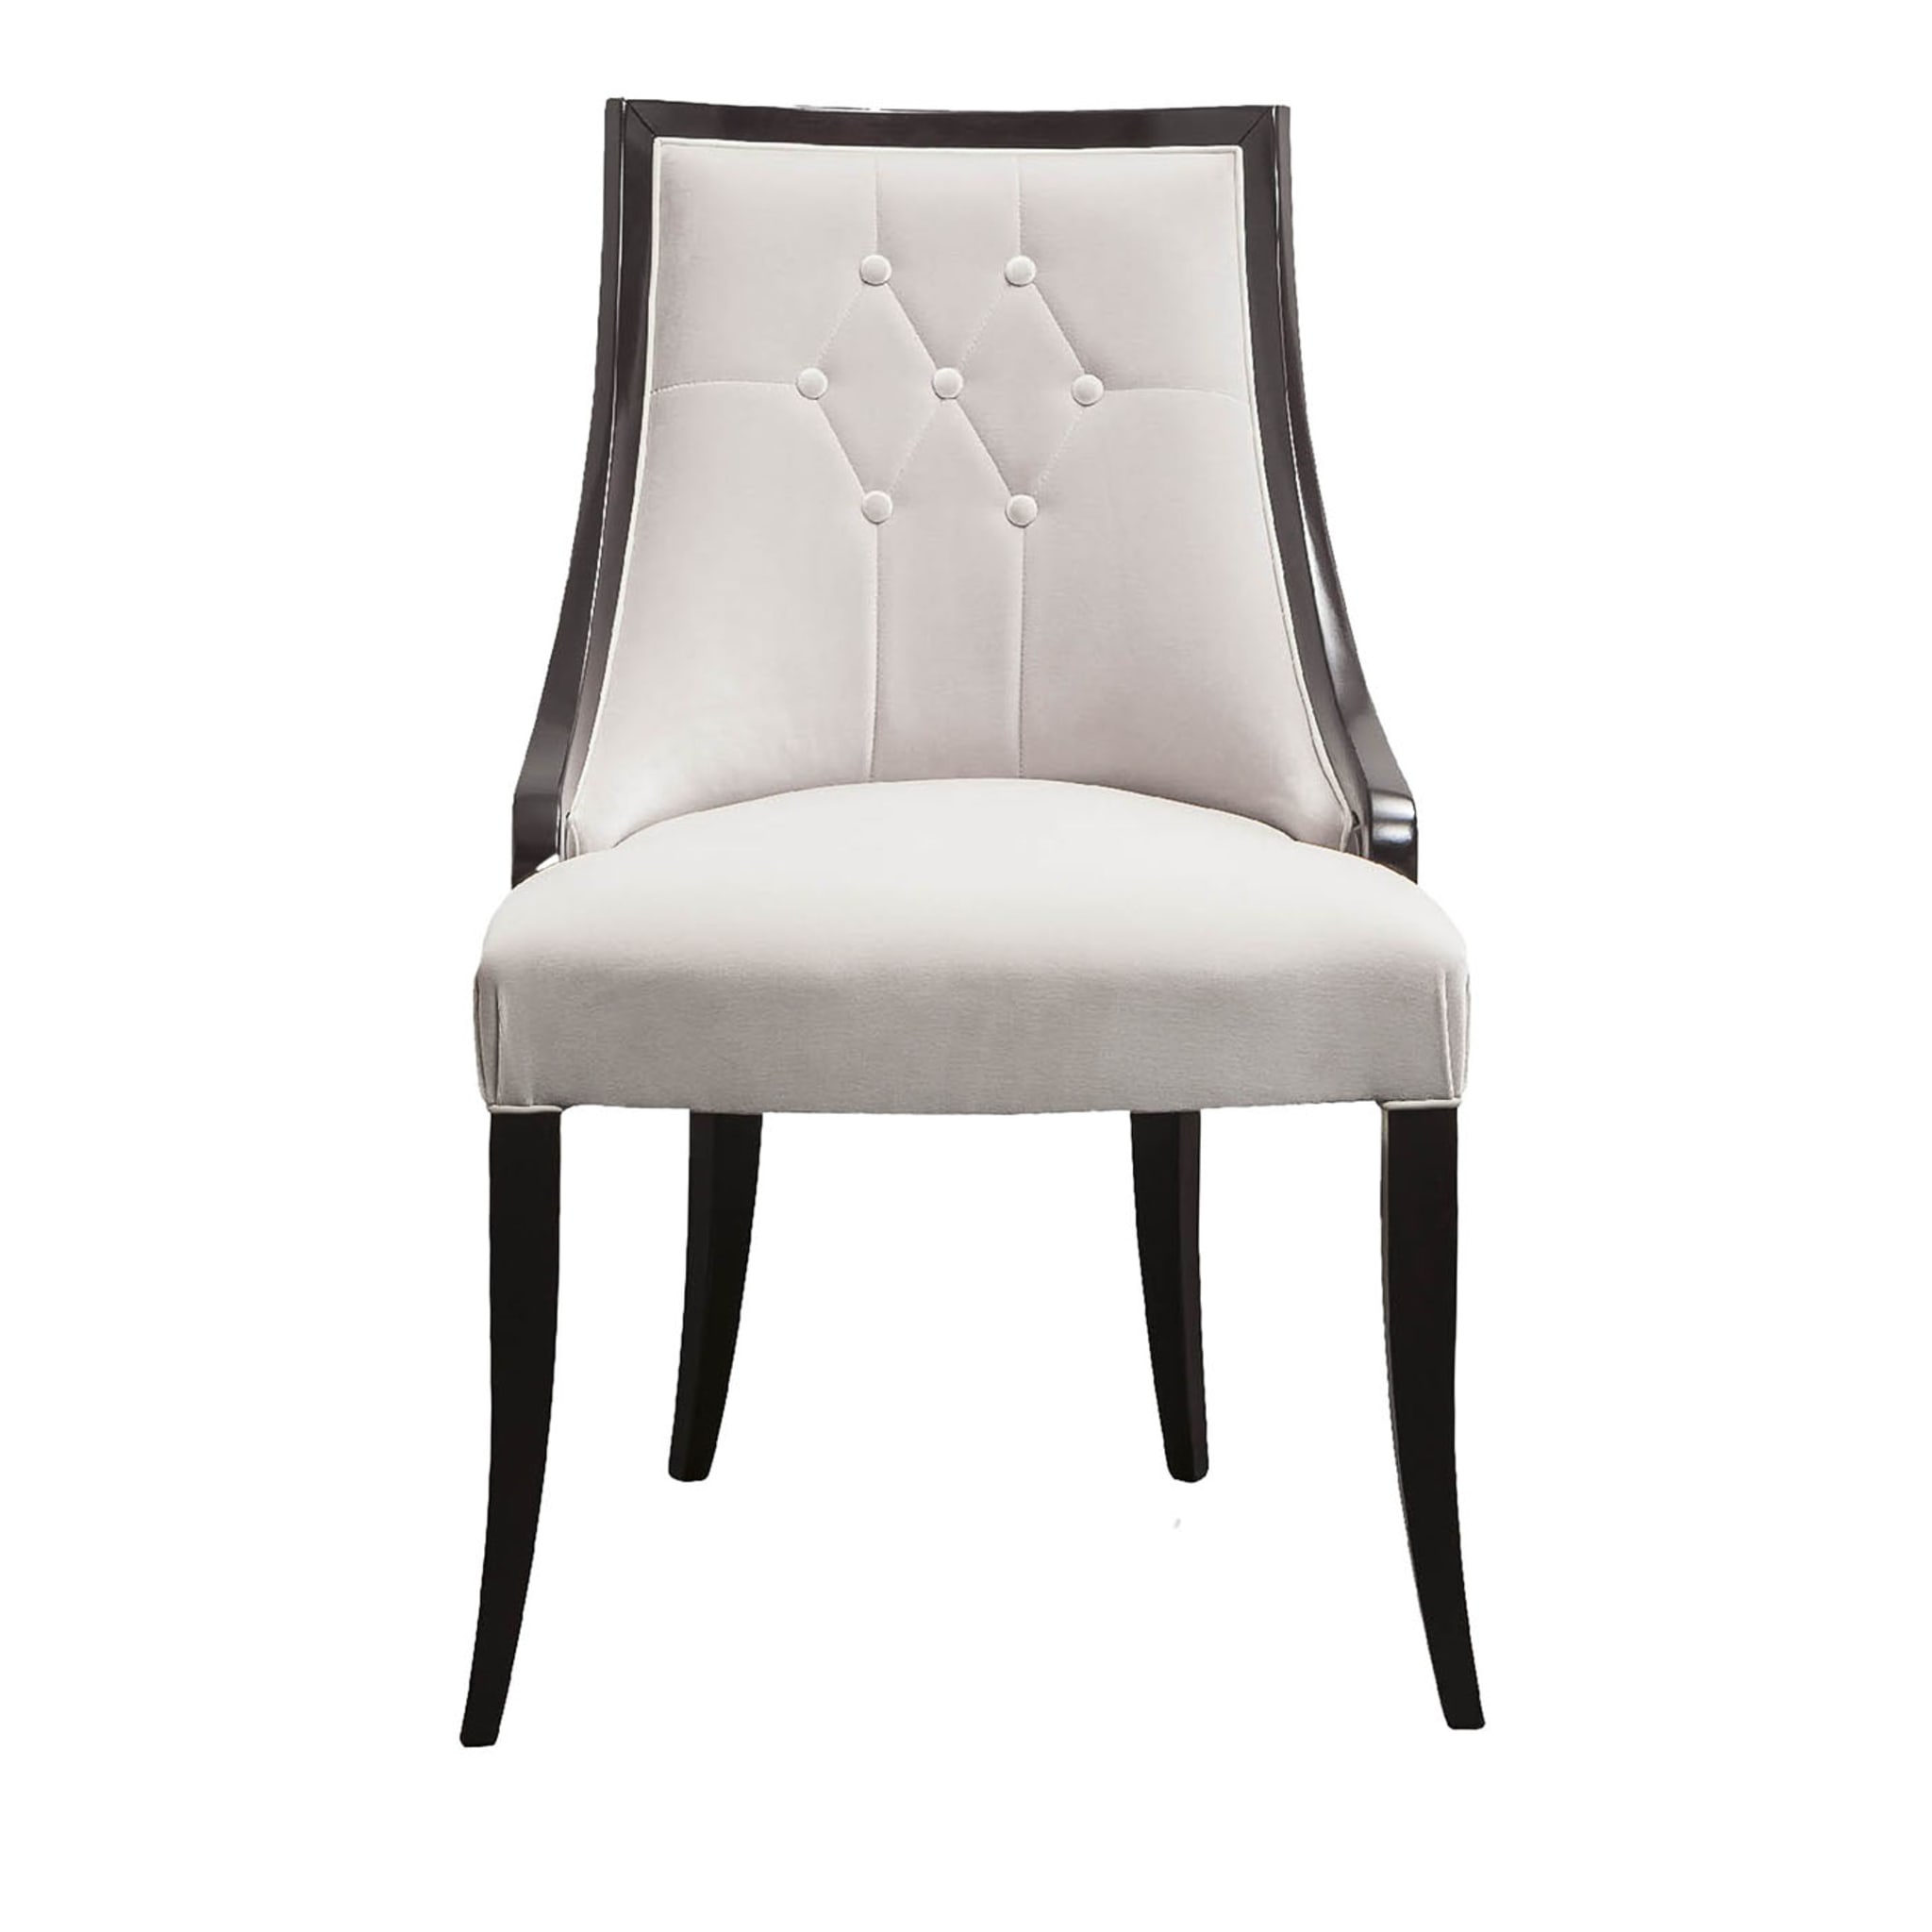 Tiffany Light-Gray Chair - Main view